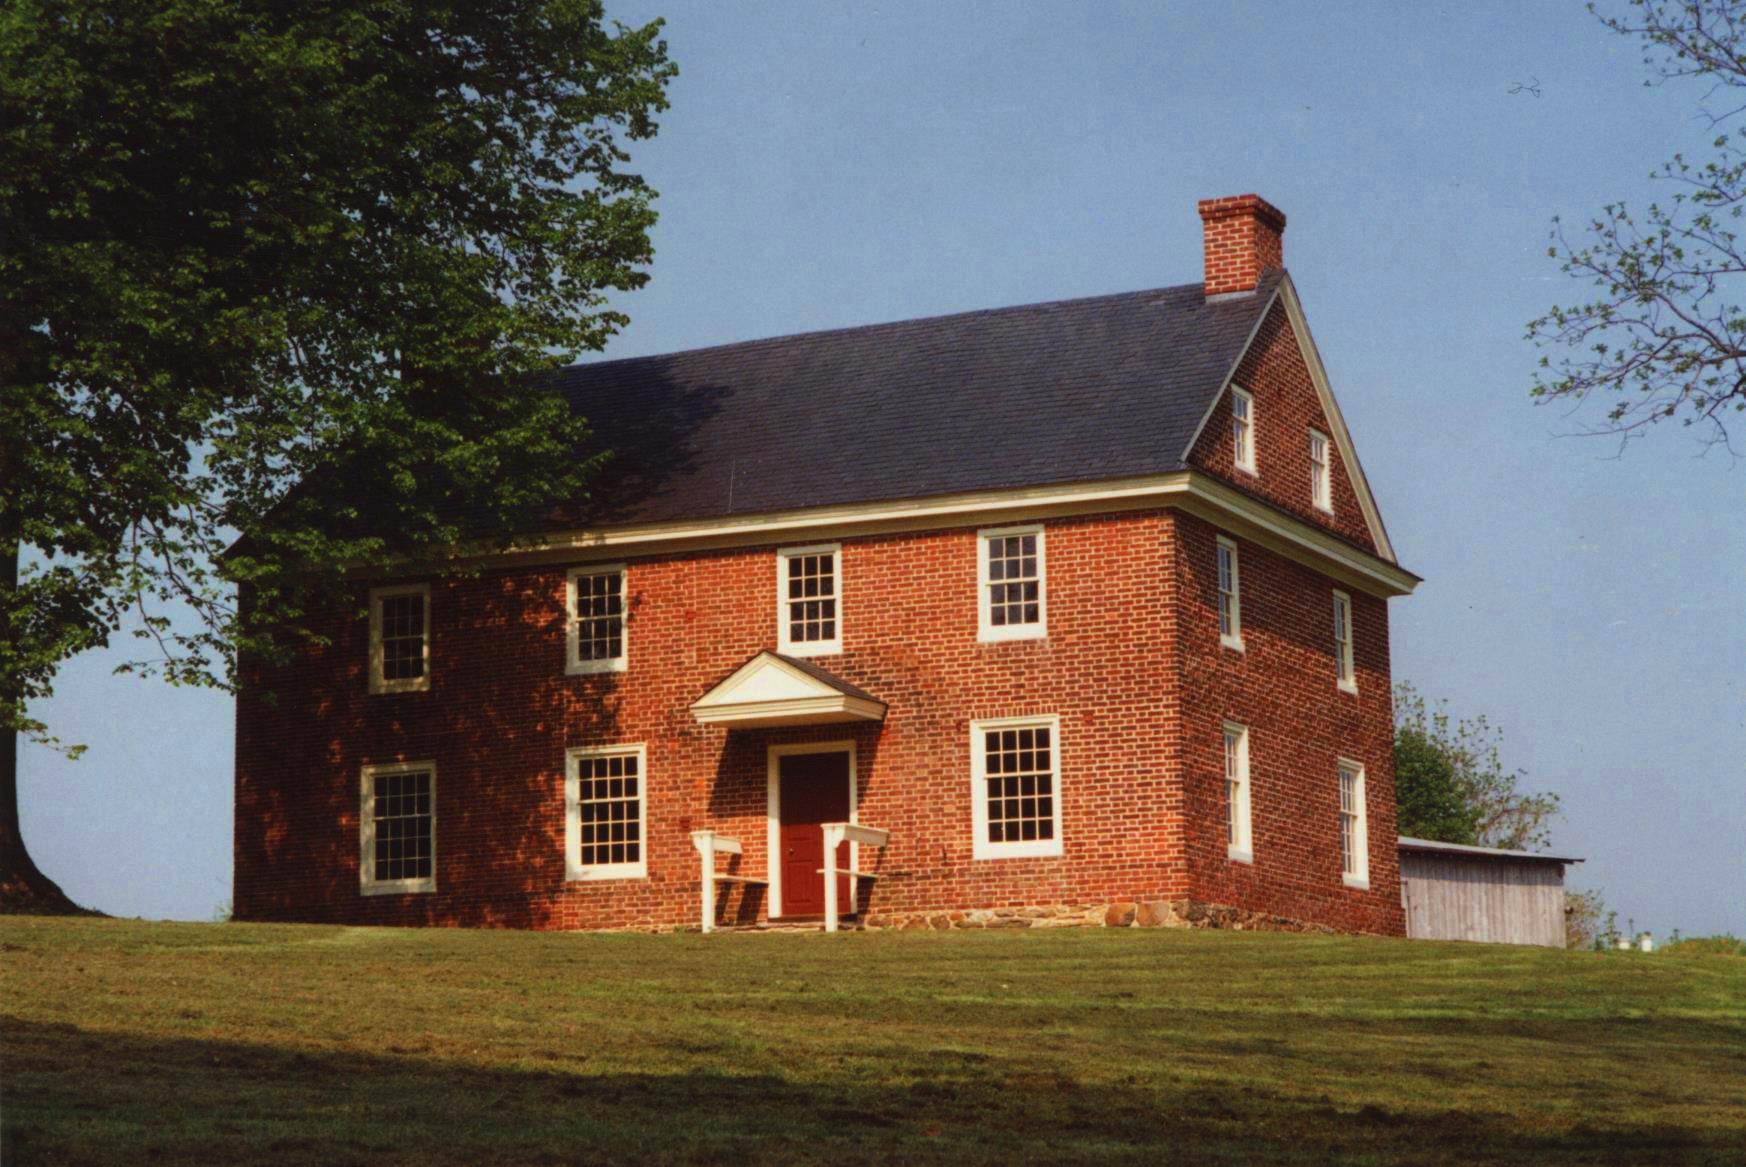 A fully restored brick home after historic preservation efforts.